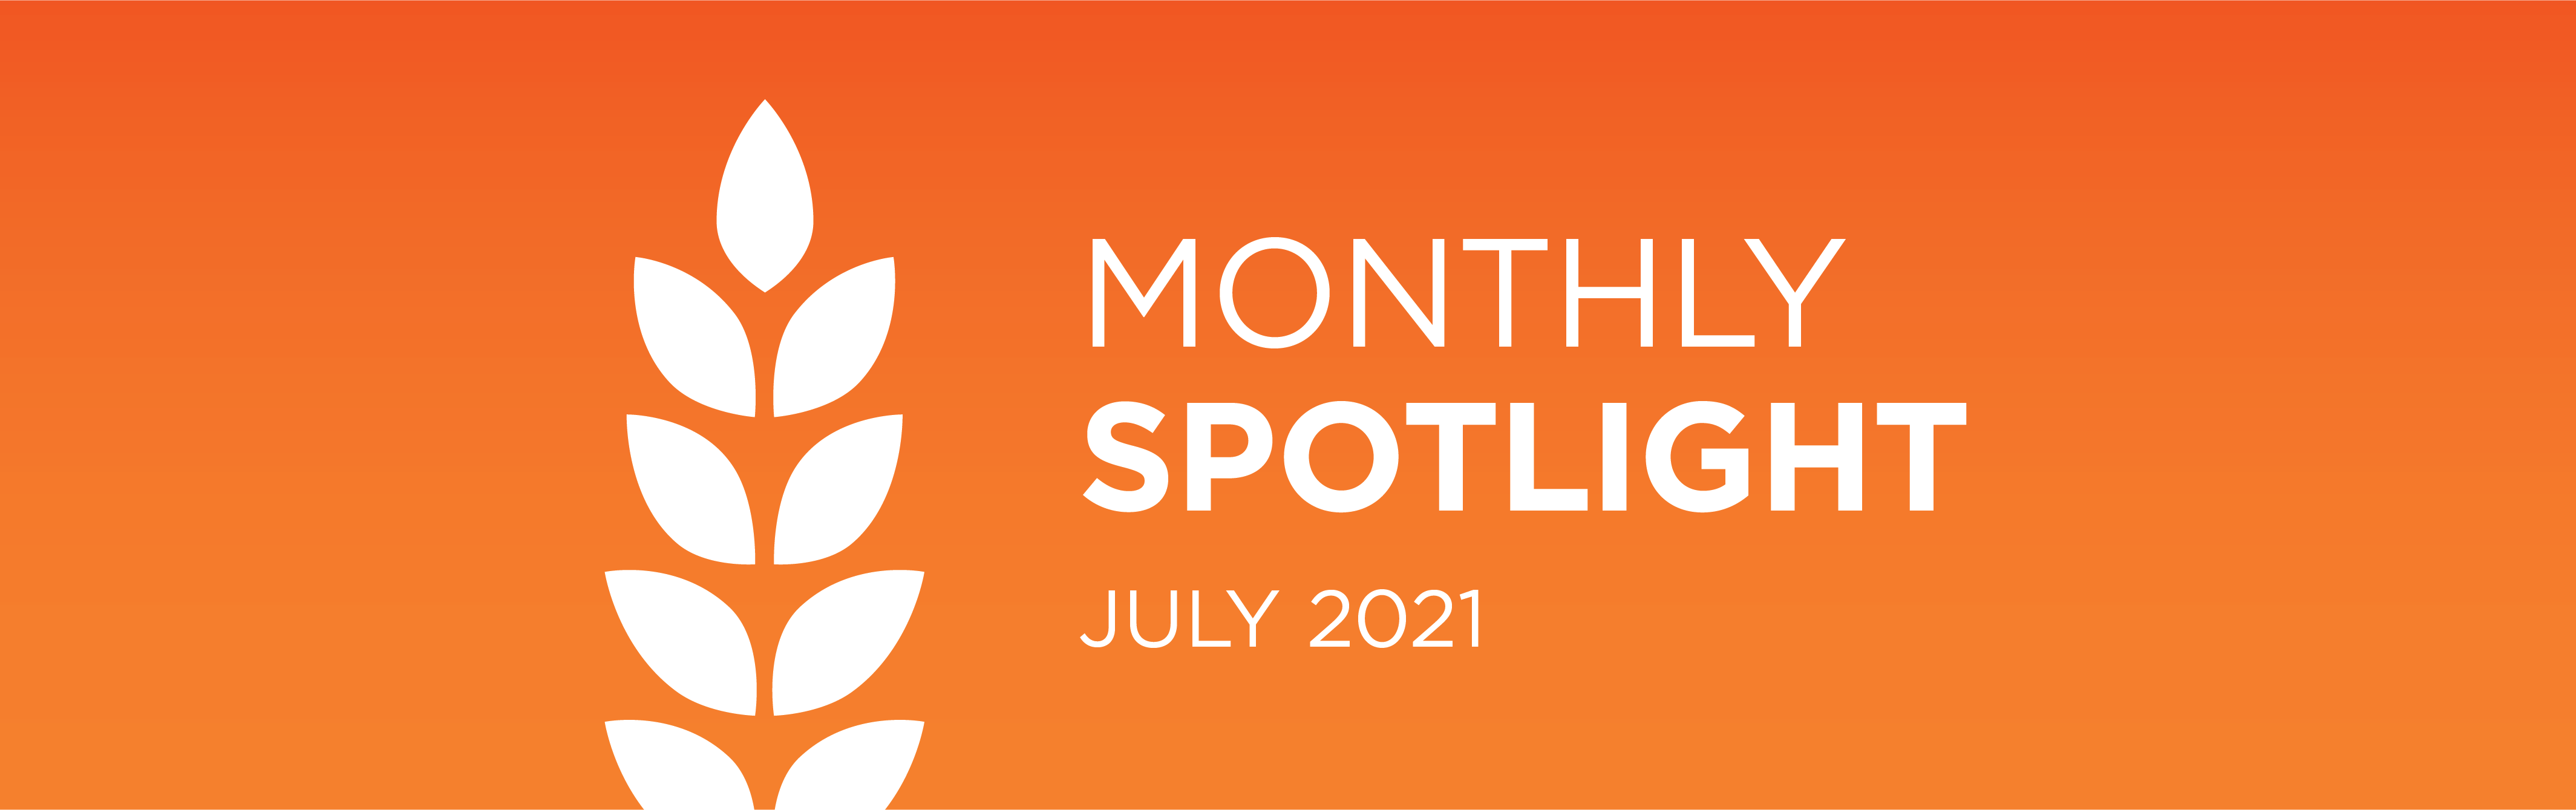 Feeding South Florida’s Monthly Spotlight: July 2021